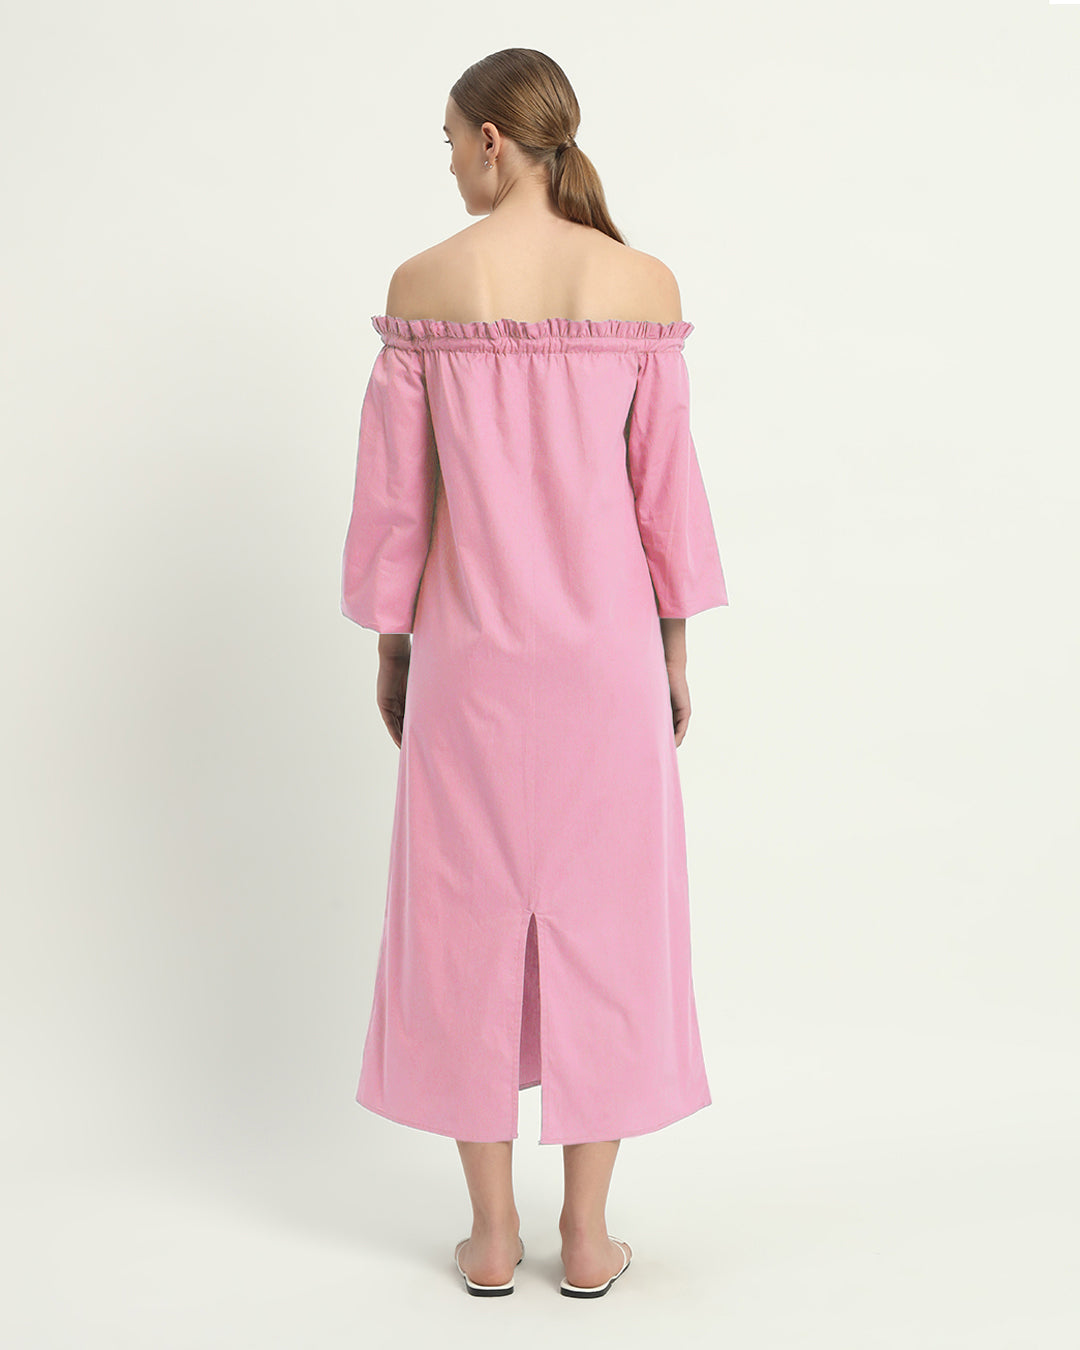 The Fondant Pink Carlisle Cotton Dress